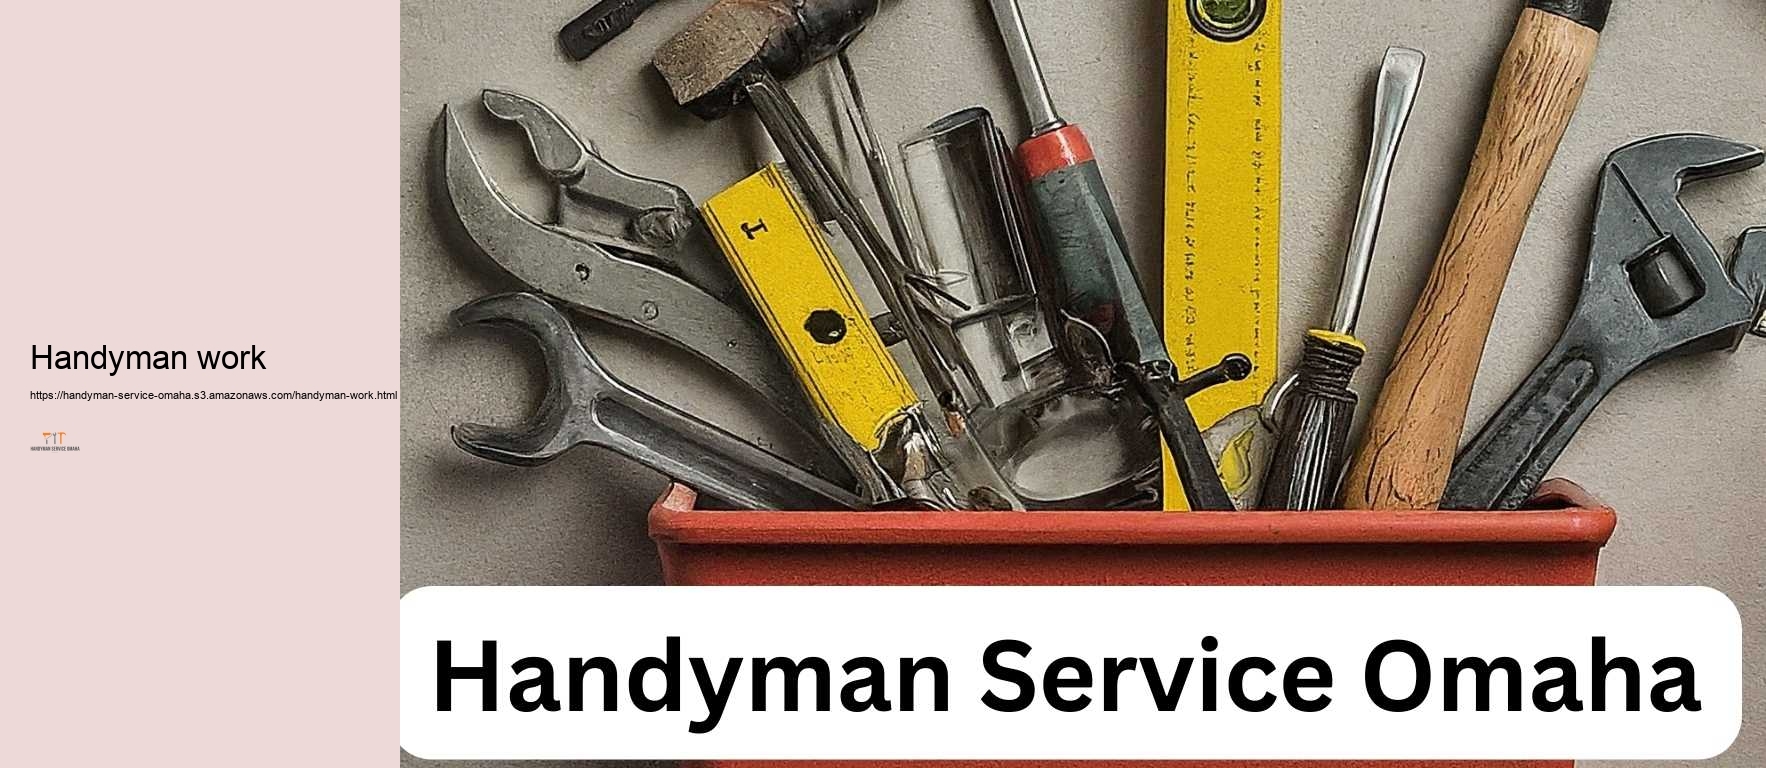 Handyman work